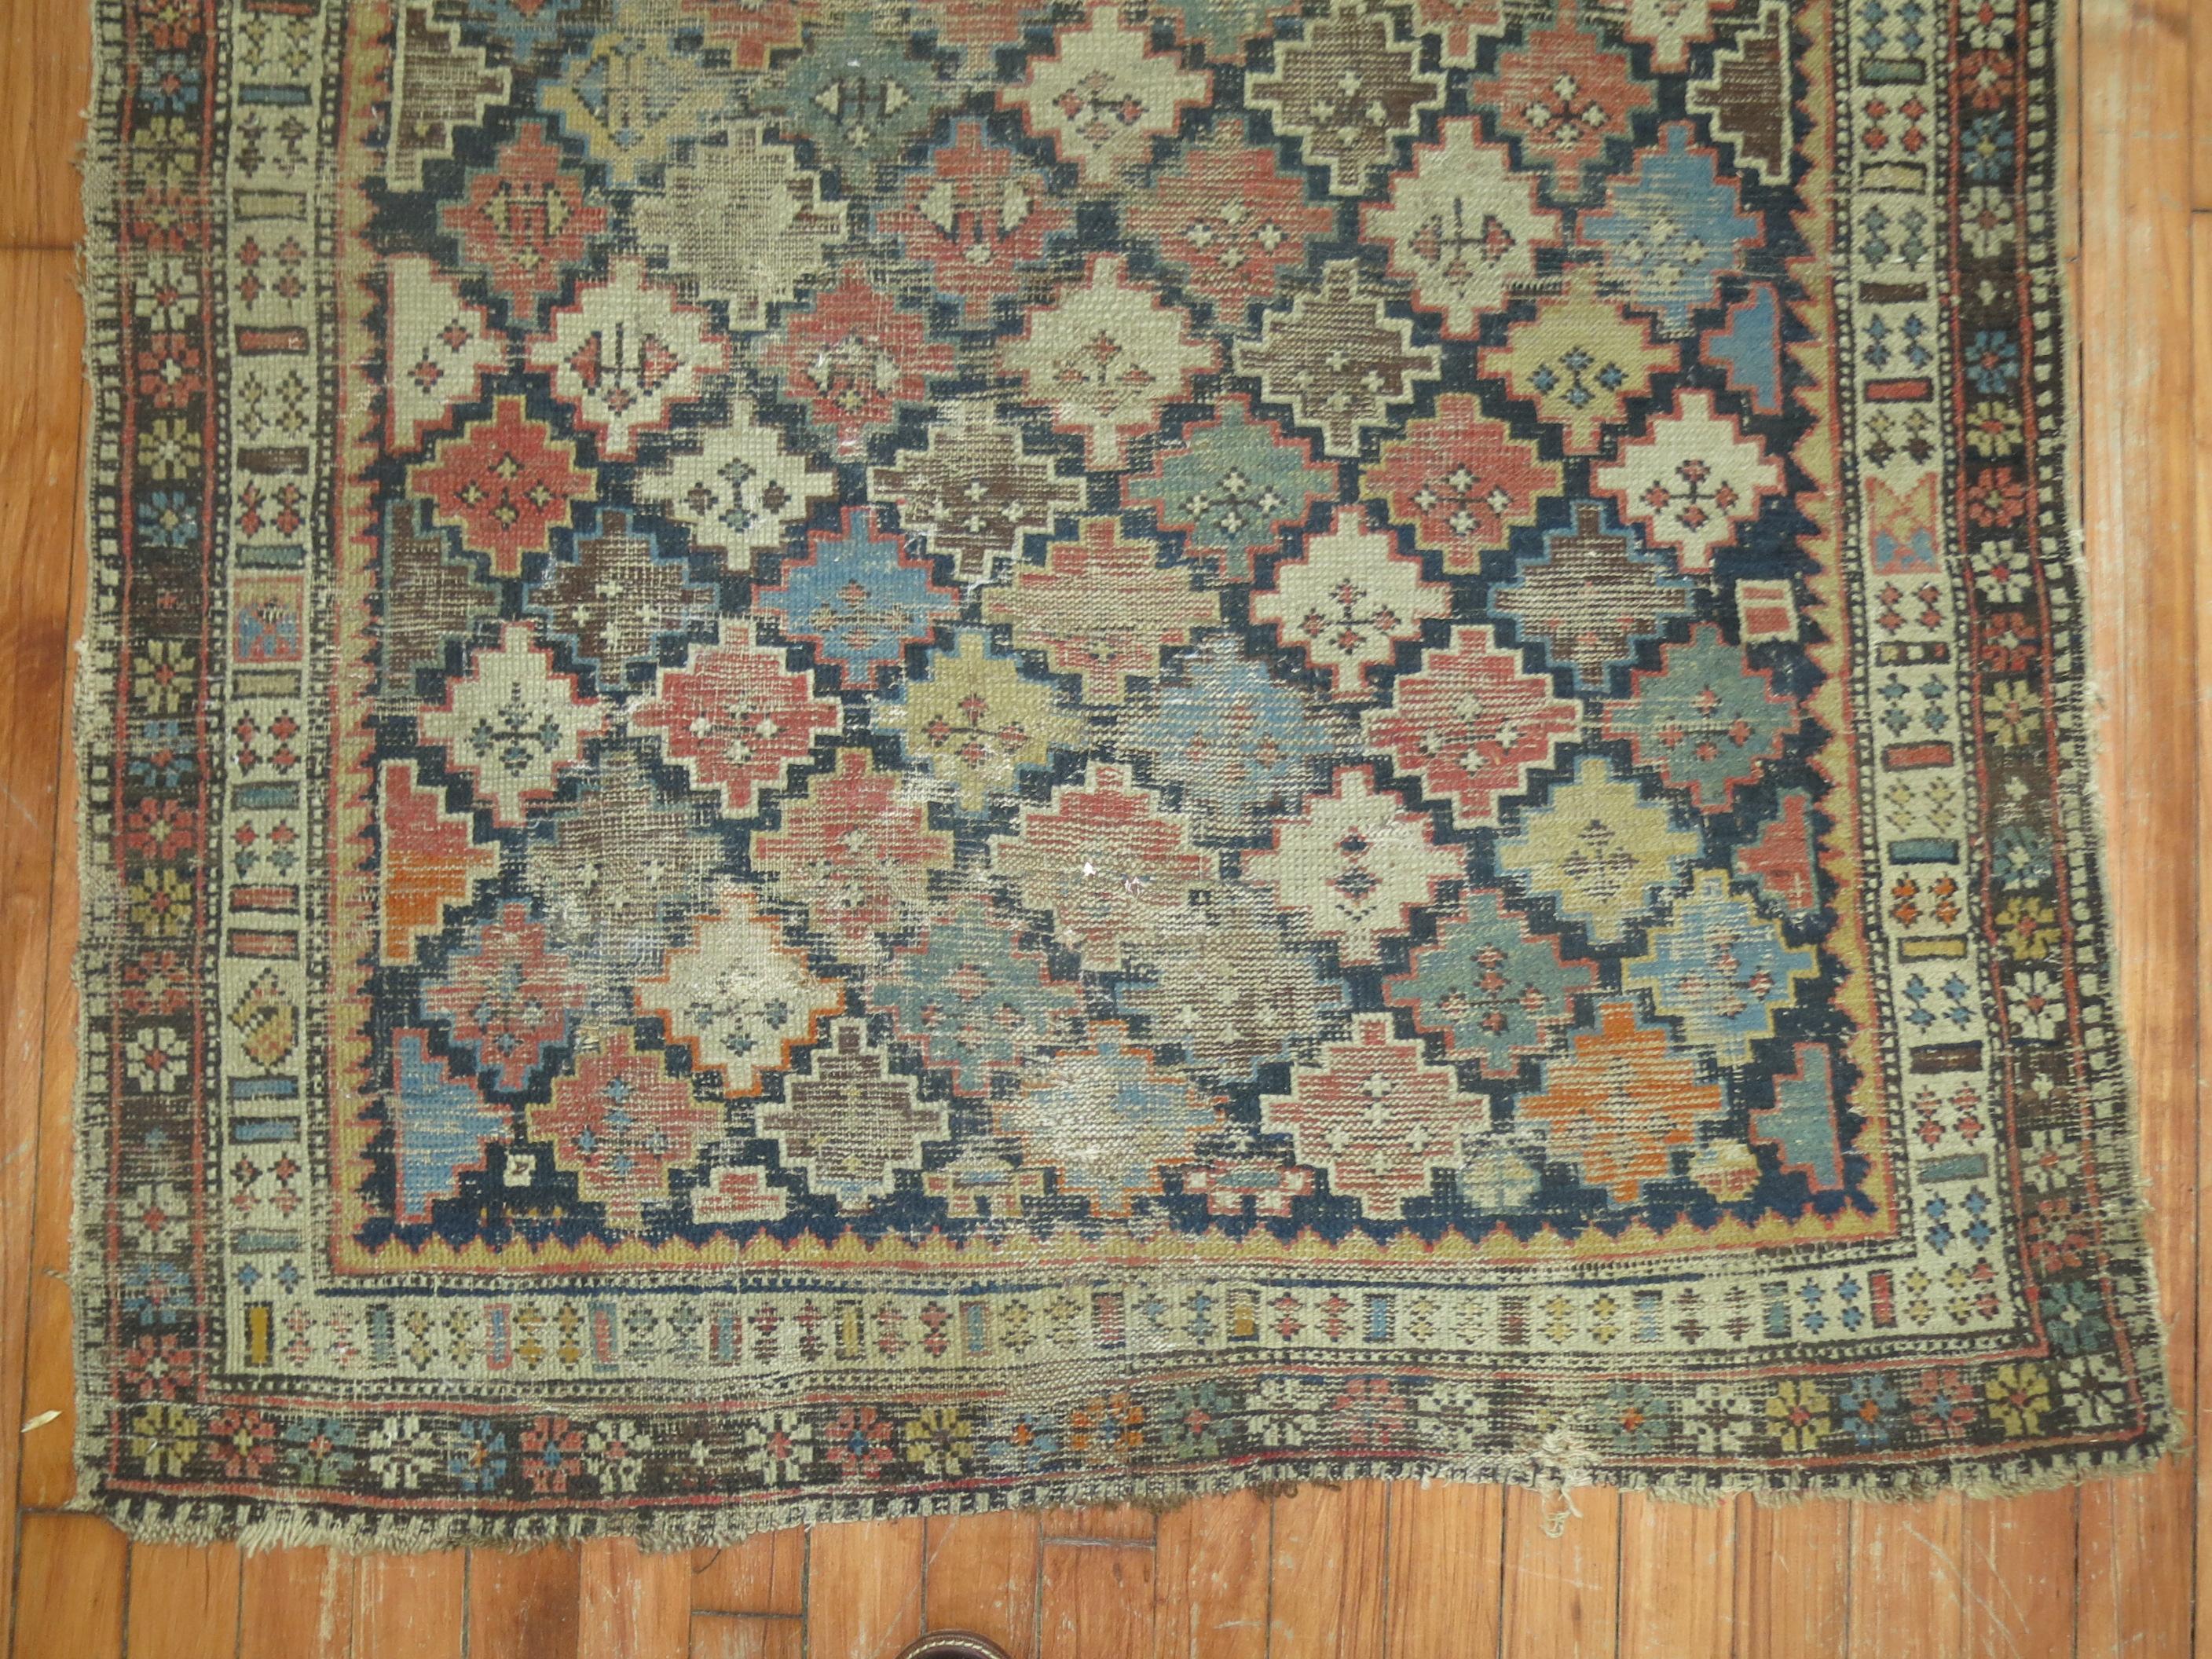 Worn 19th century Caucasian tribal rug.

3'5'' x 4'4''